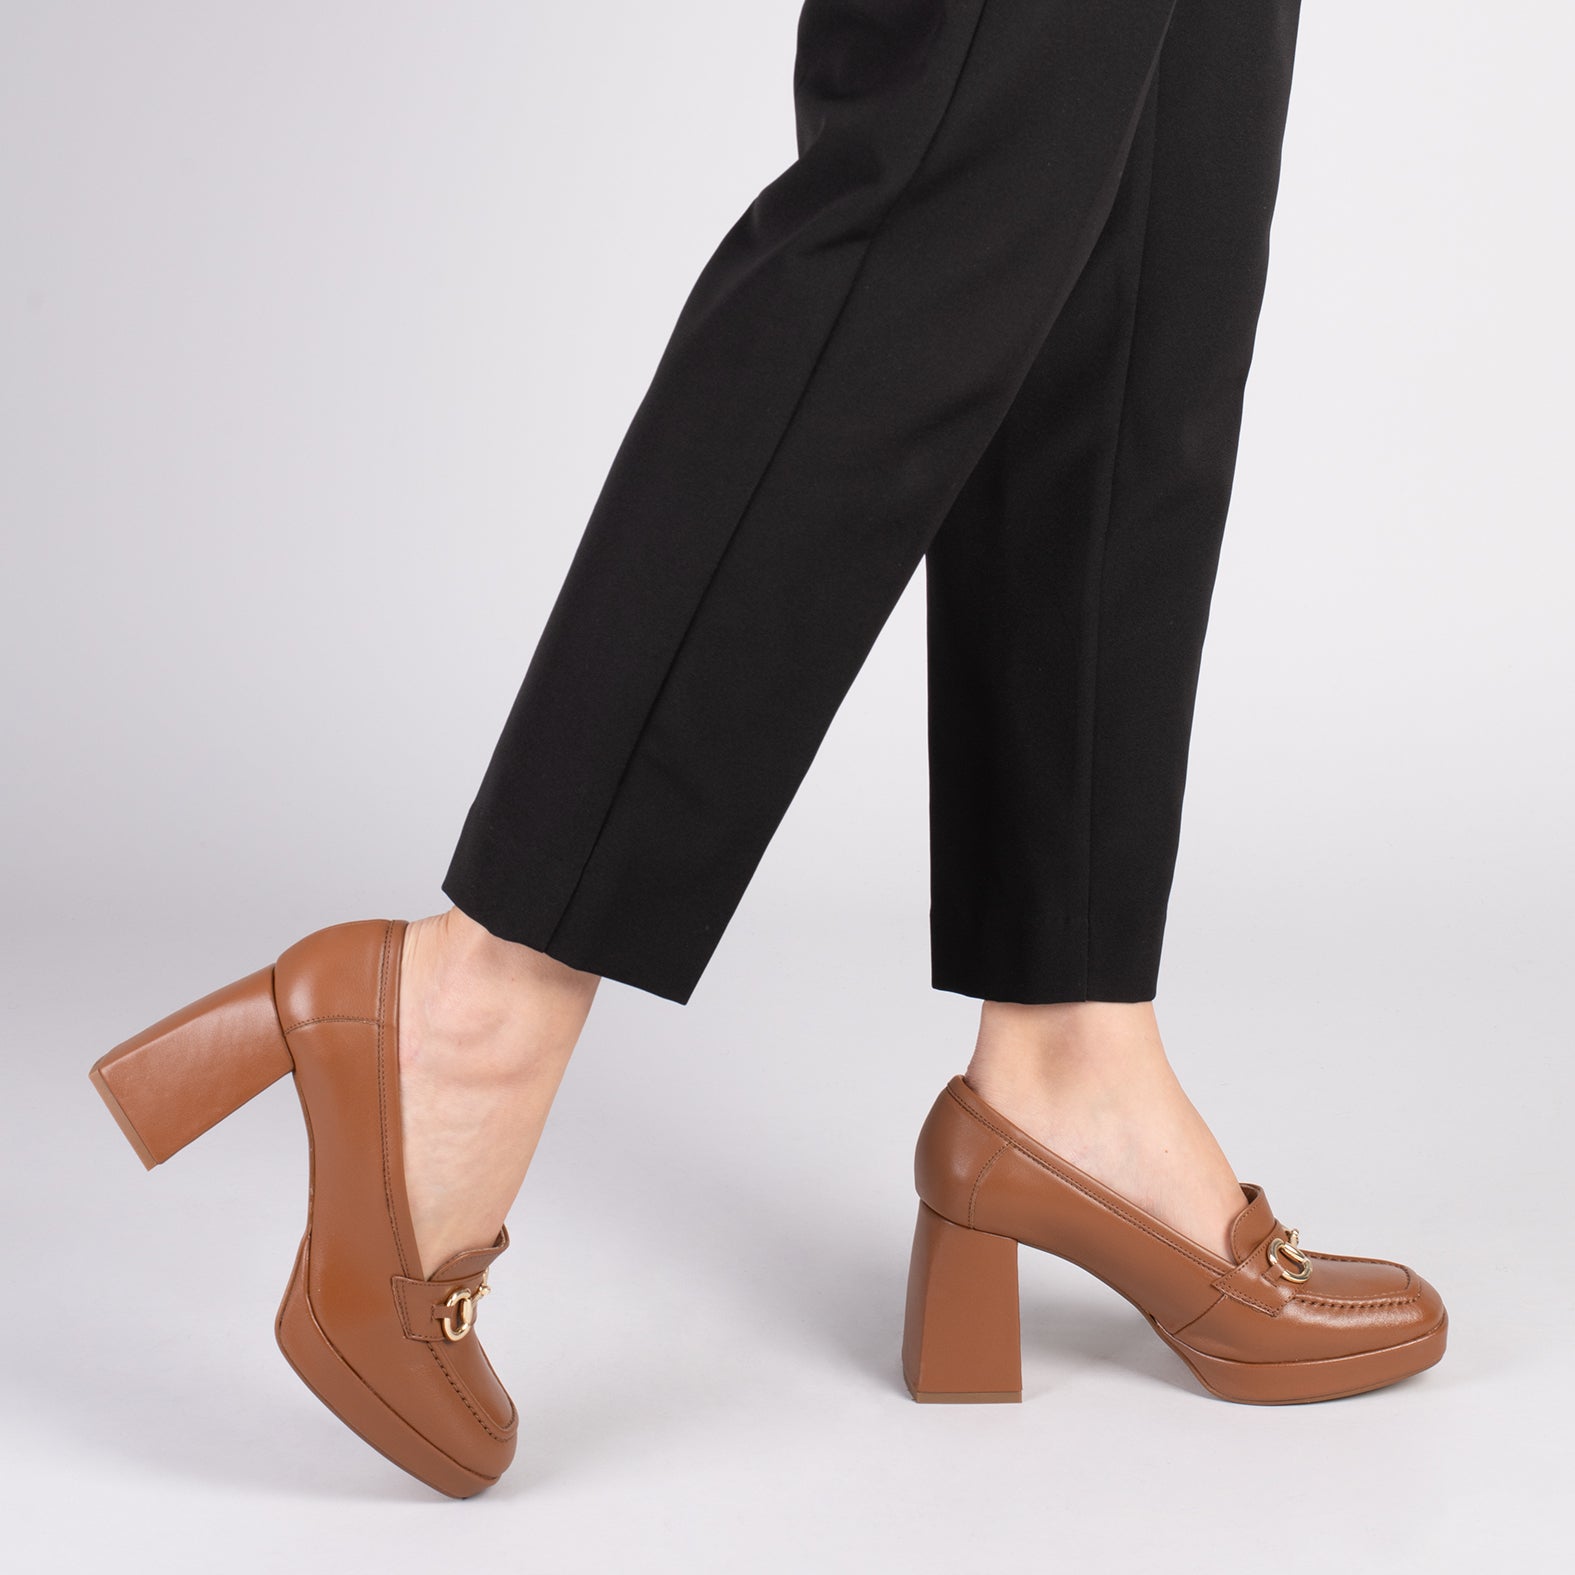 ANNETTE – CAMEL moccasins with block heel and platform